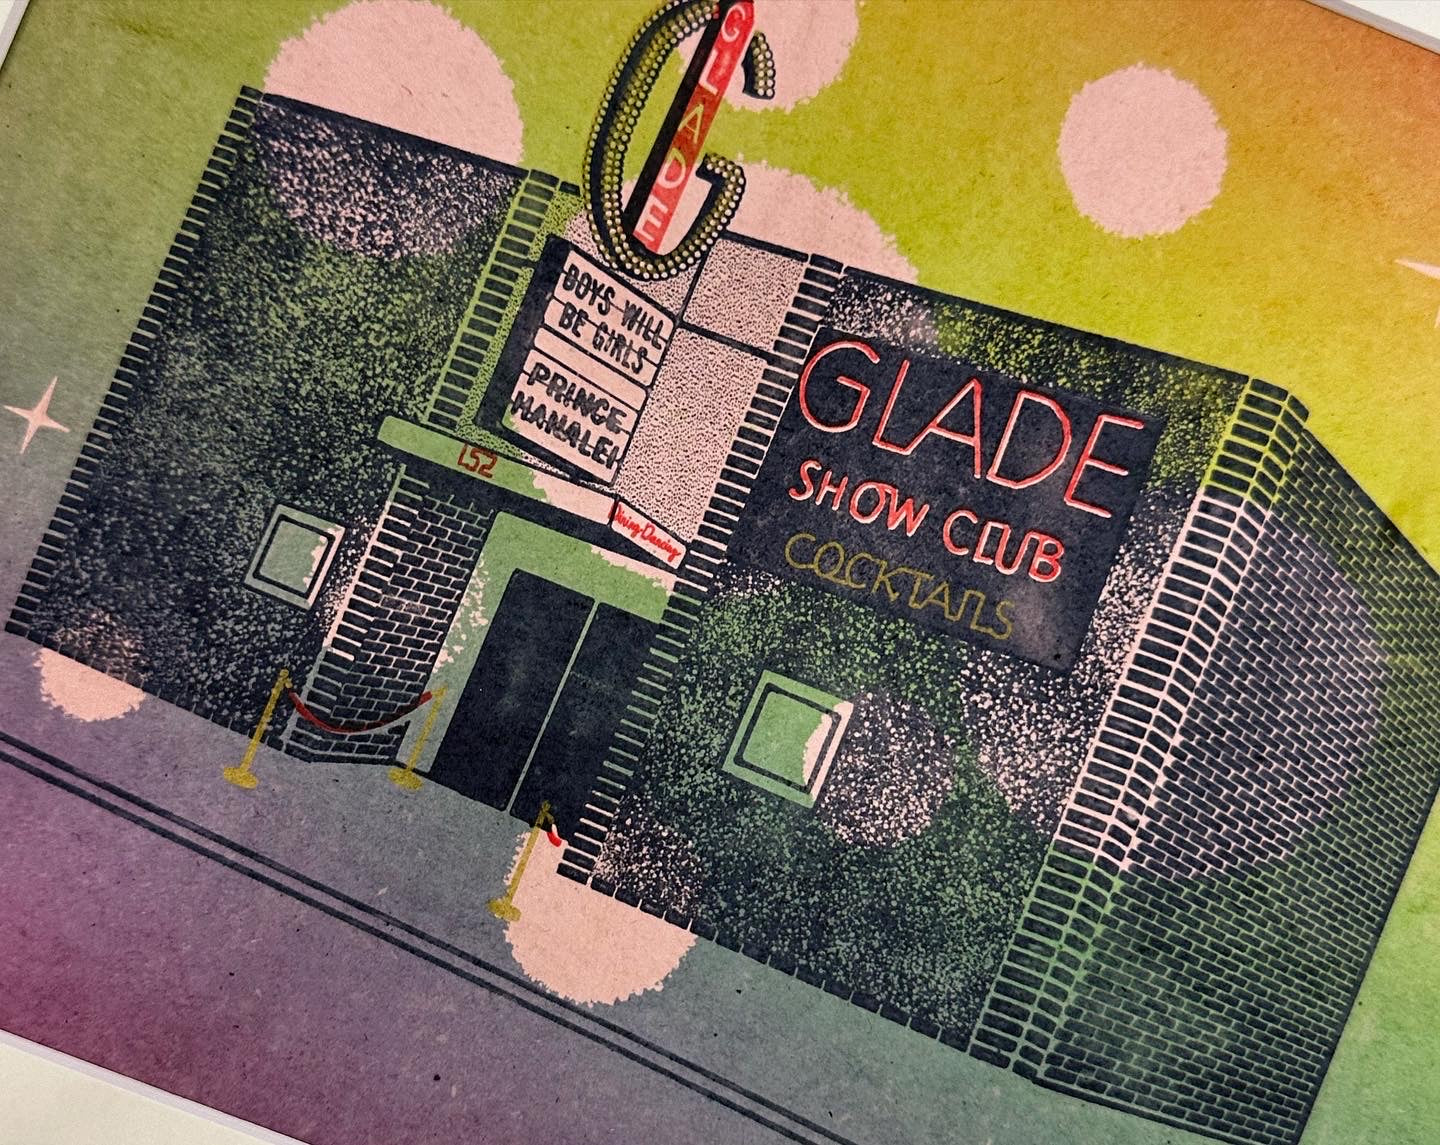 Glade Show Lounge